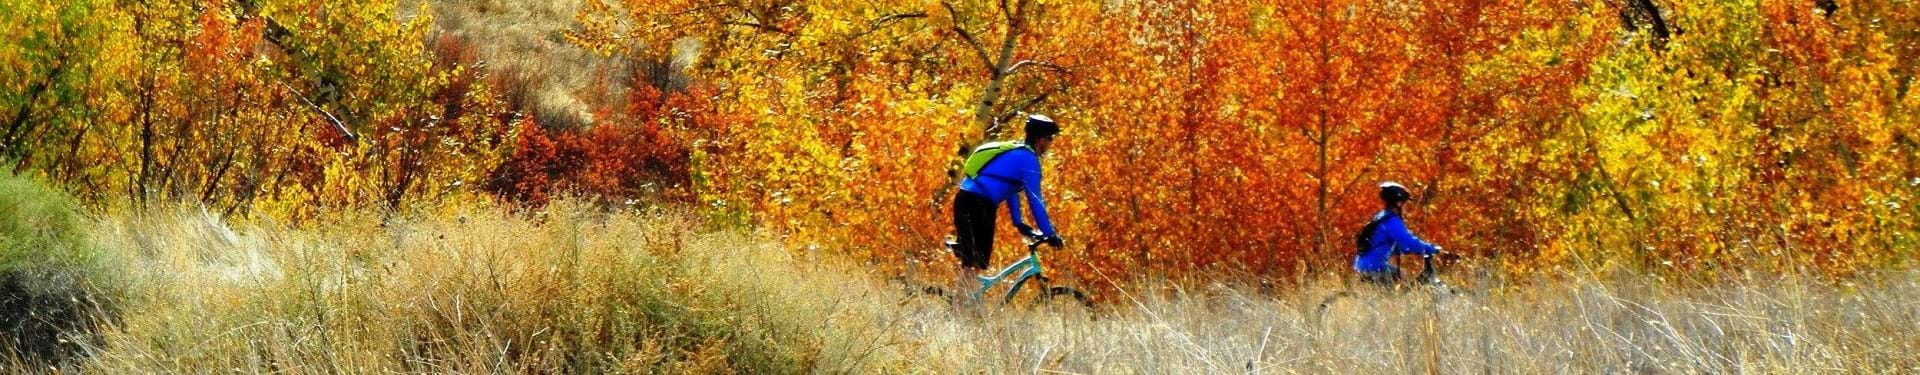 Fall_Bikes_Foothills.jpg